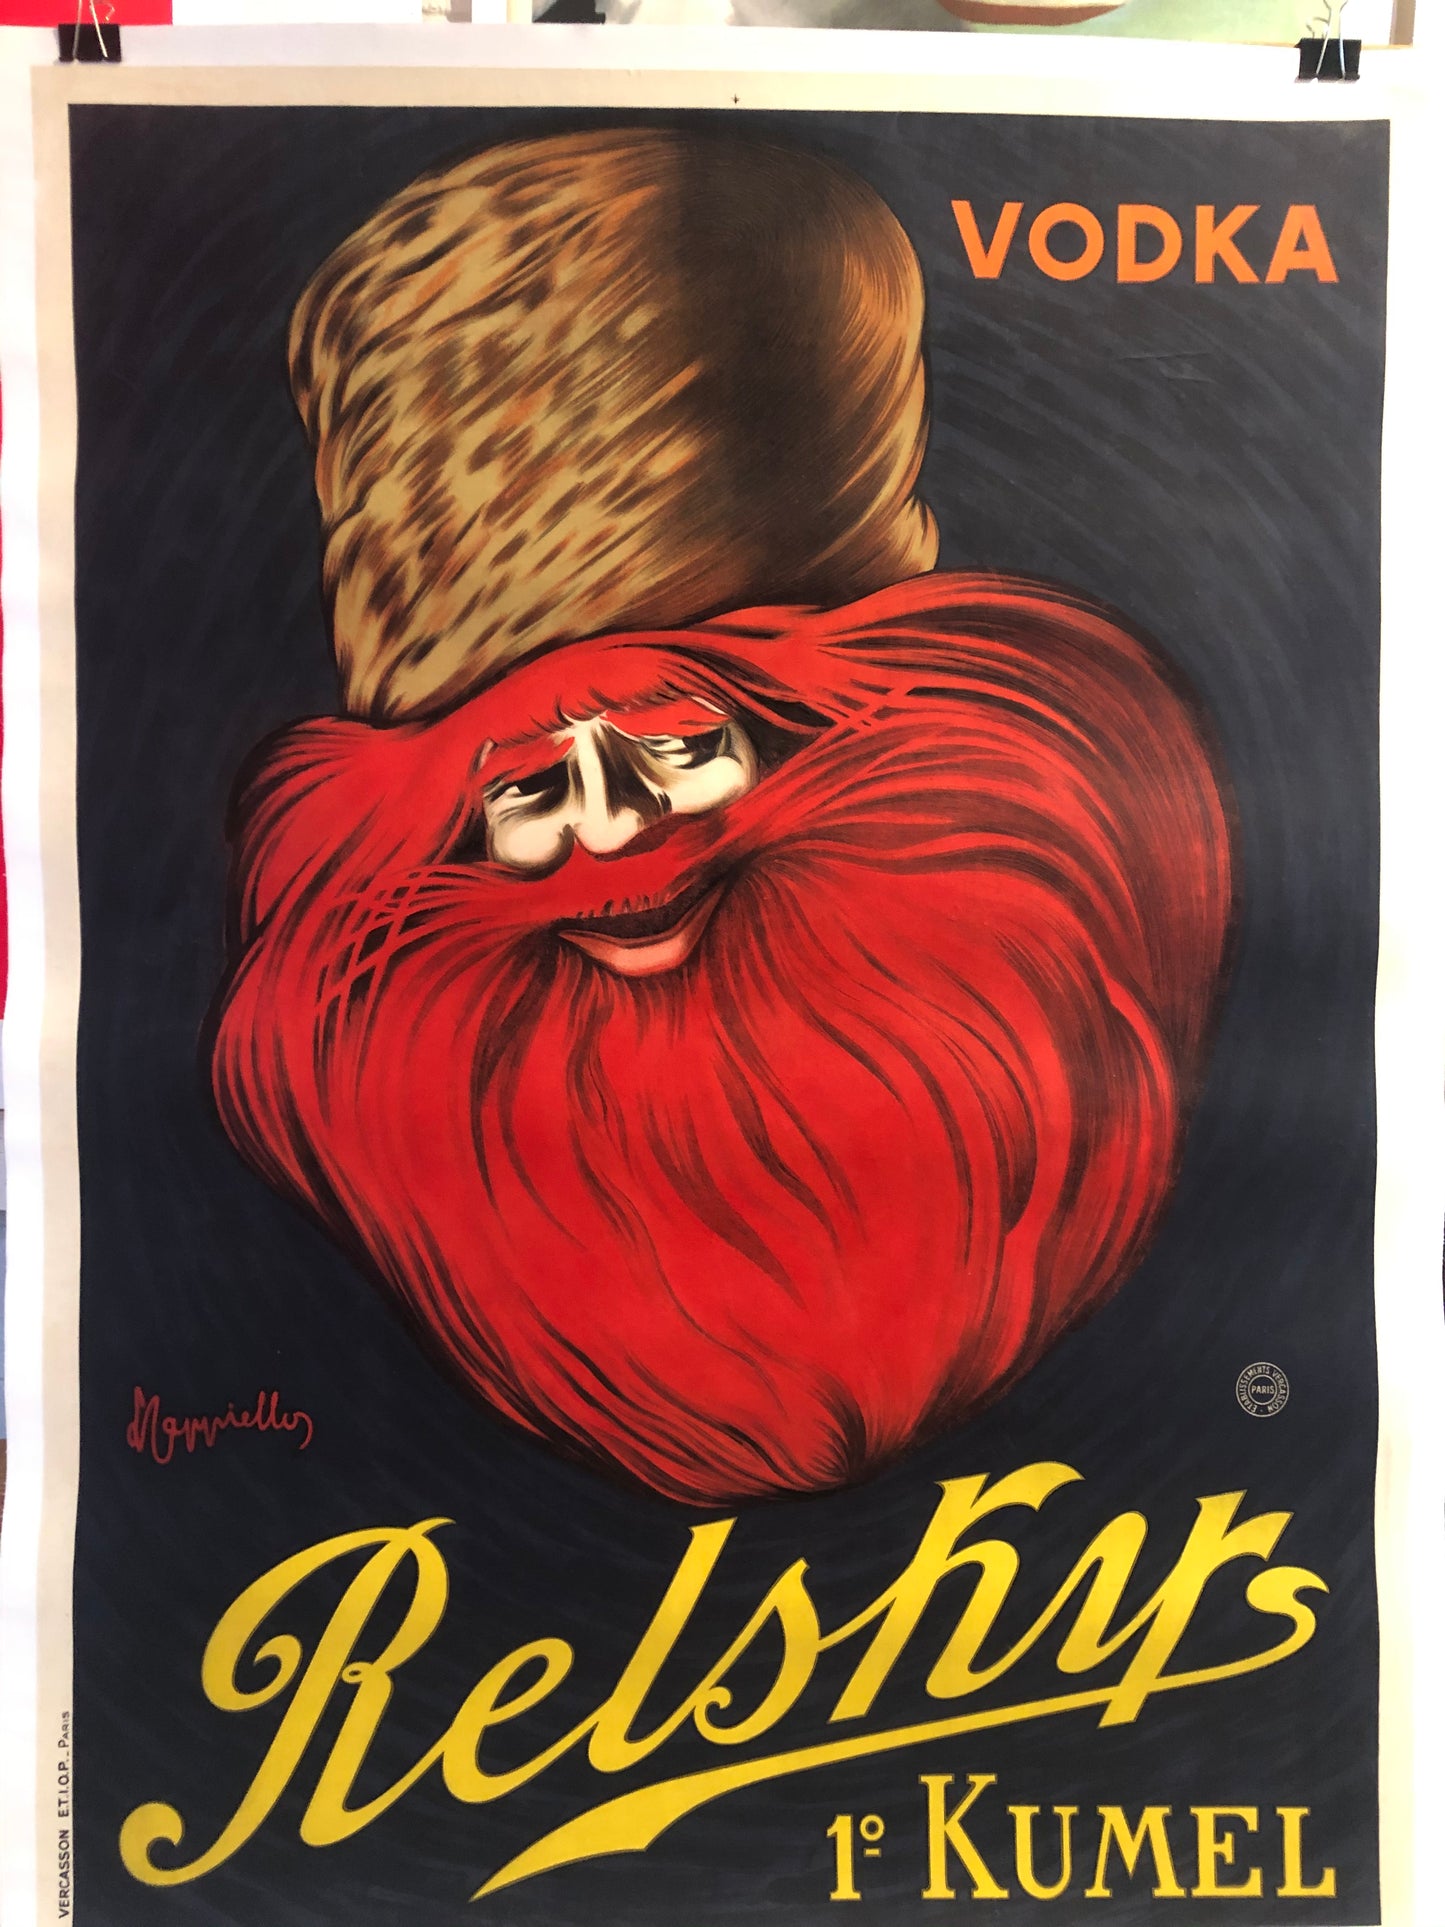 Vodka Relsky by Cappiello